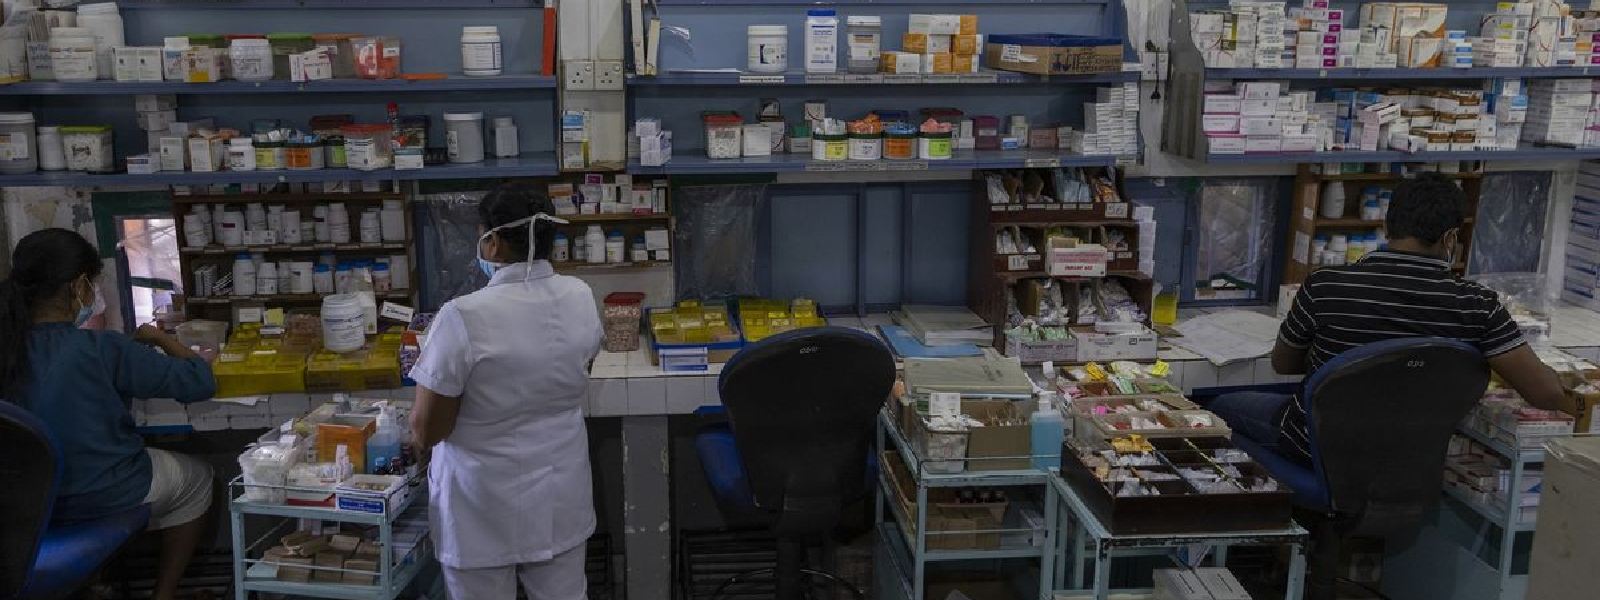 Medicine shortage has resulted in ‘medicine mafia’: Medical officers